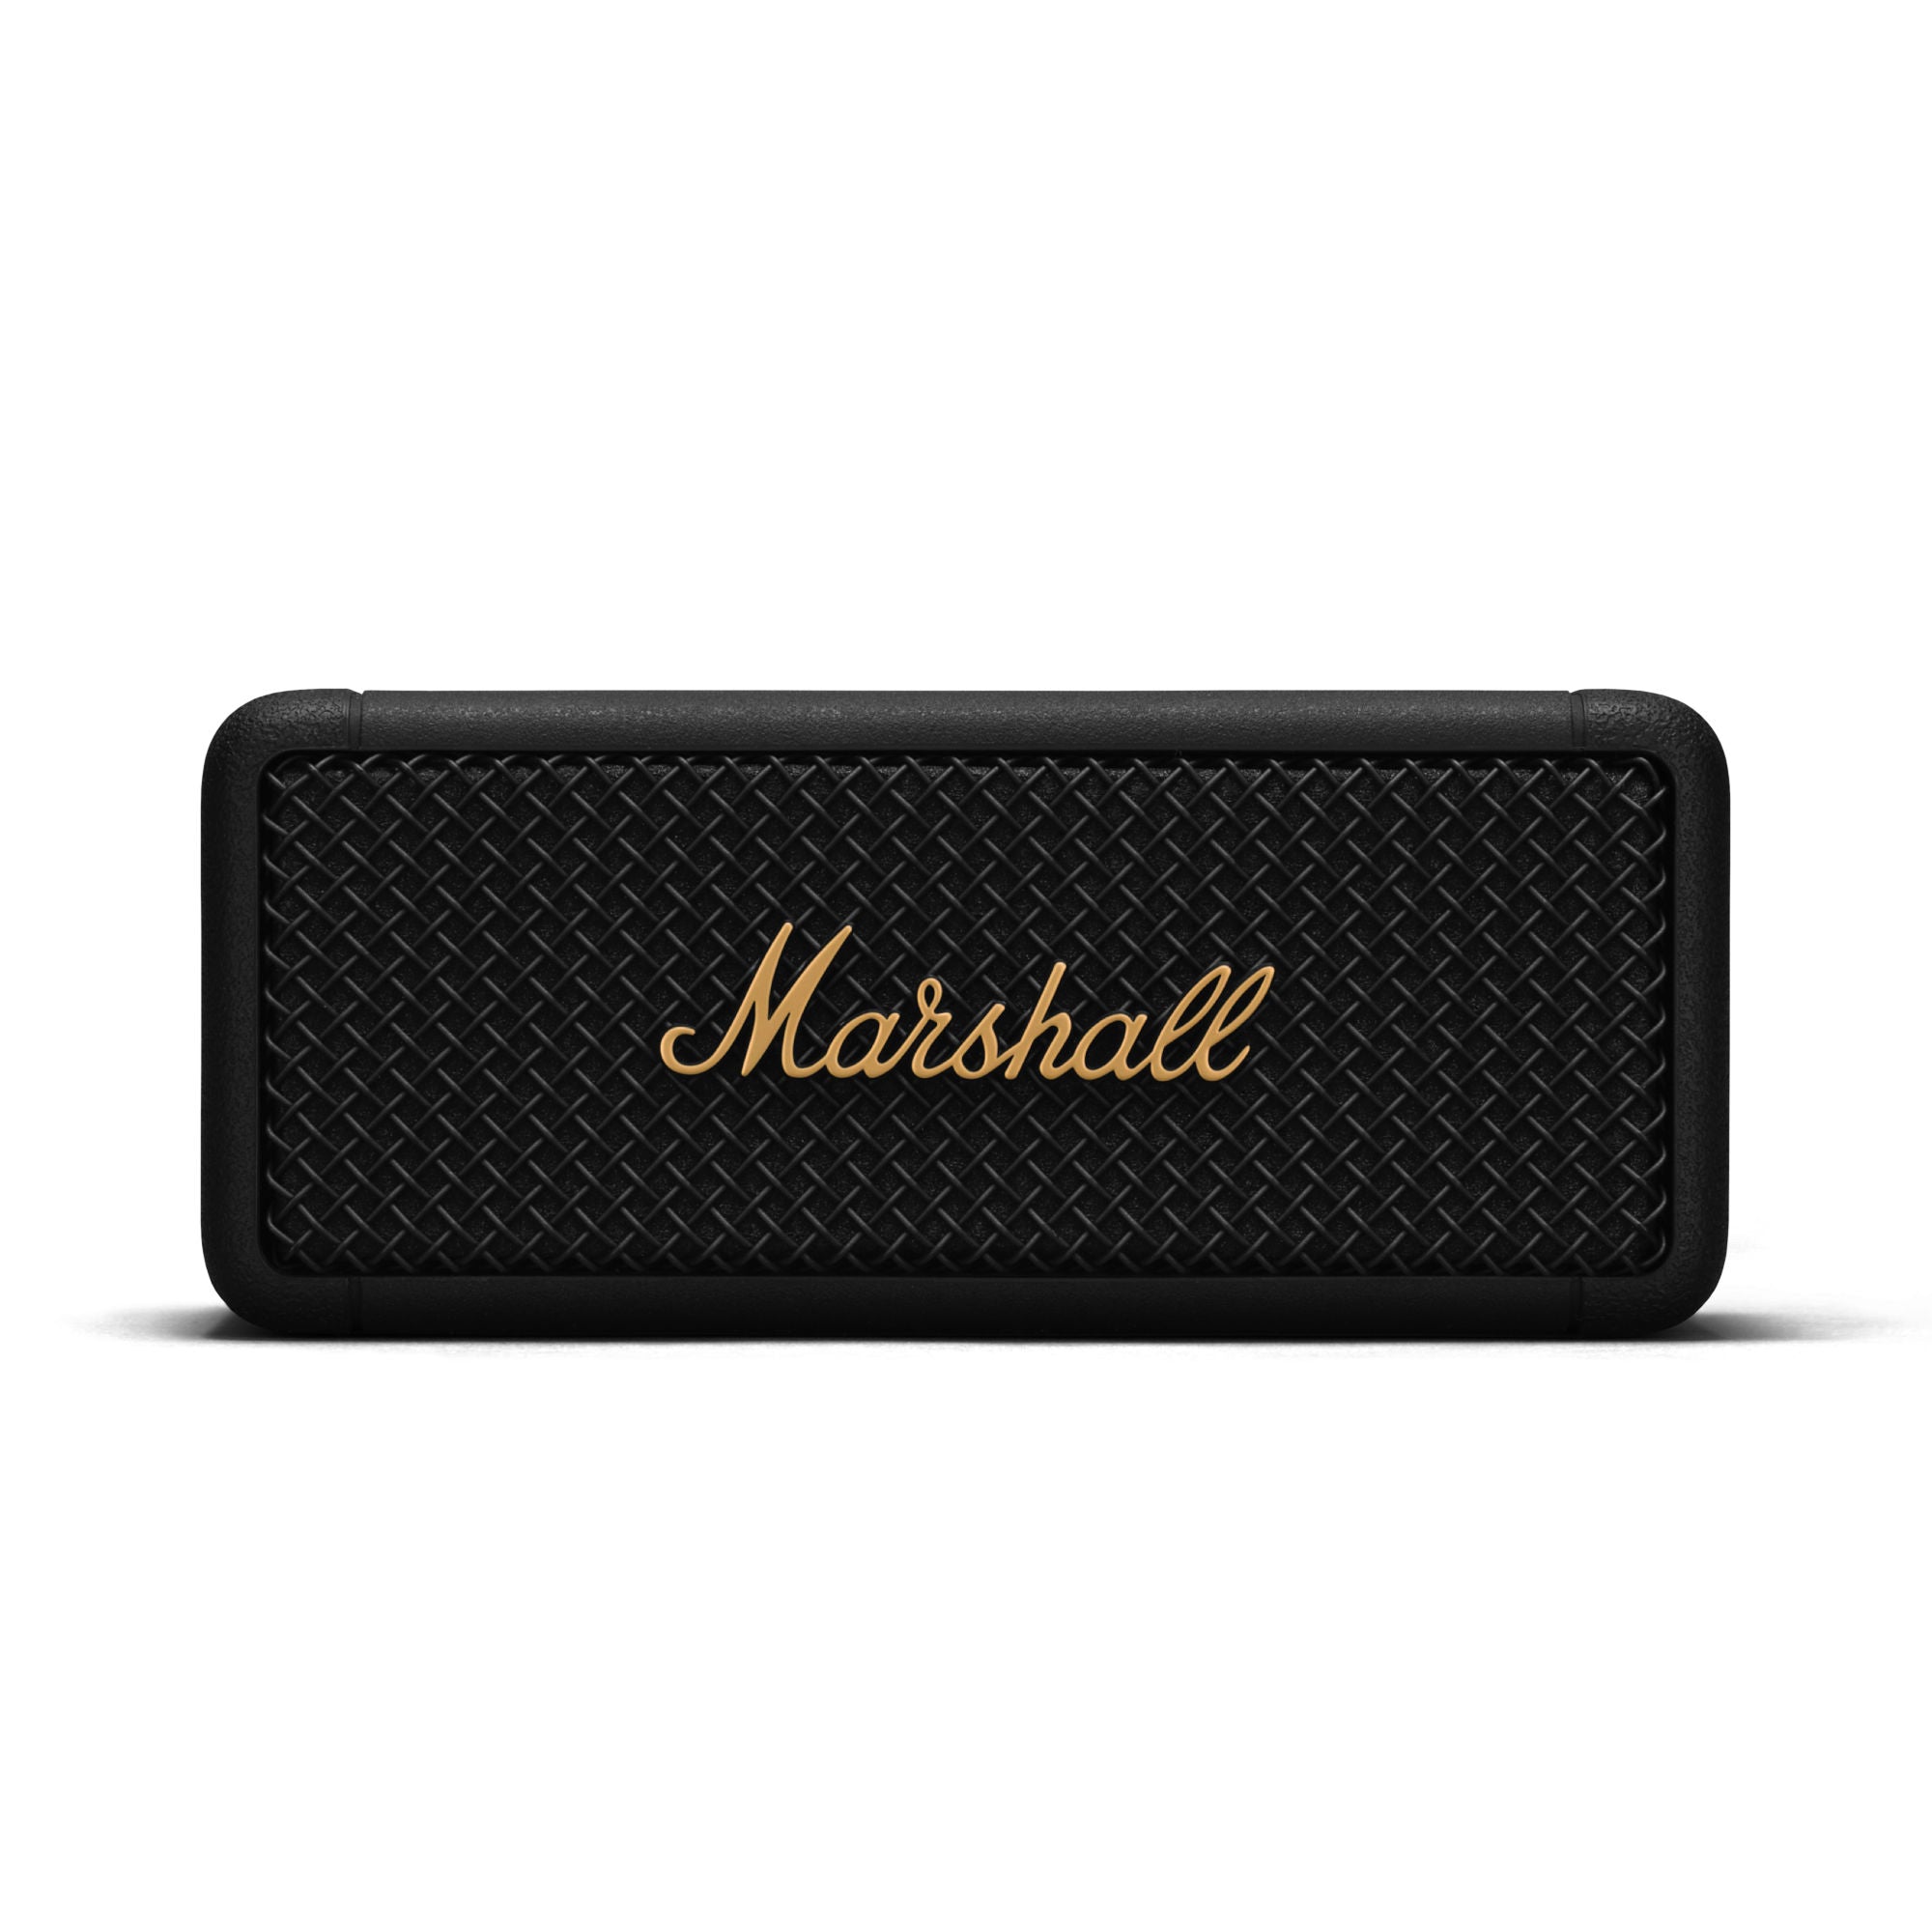 Marshall Emberton Wireless Portable Speaker , Black/Brass